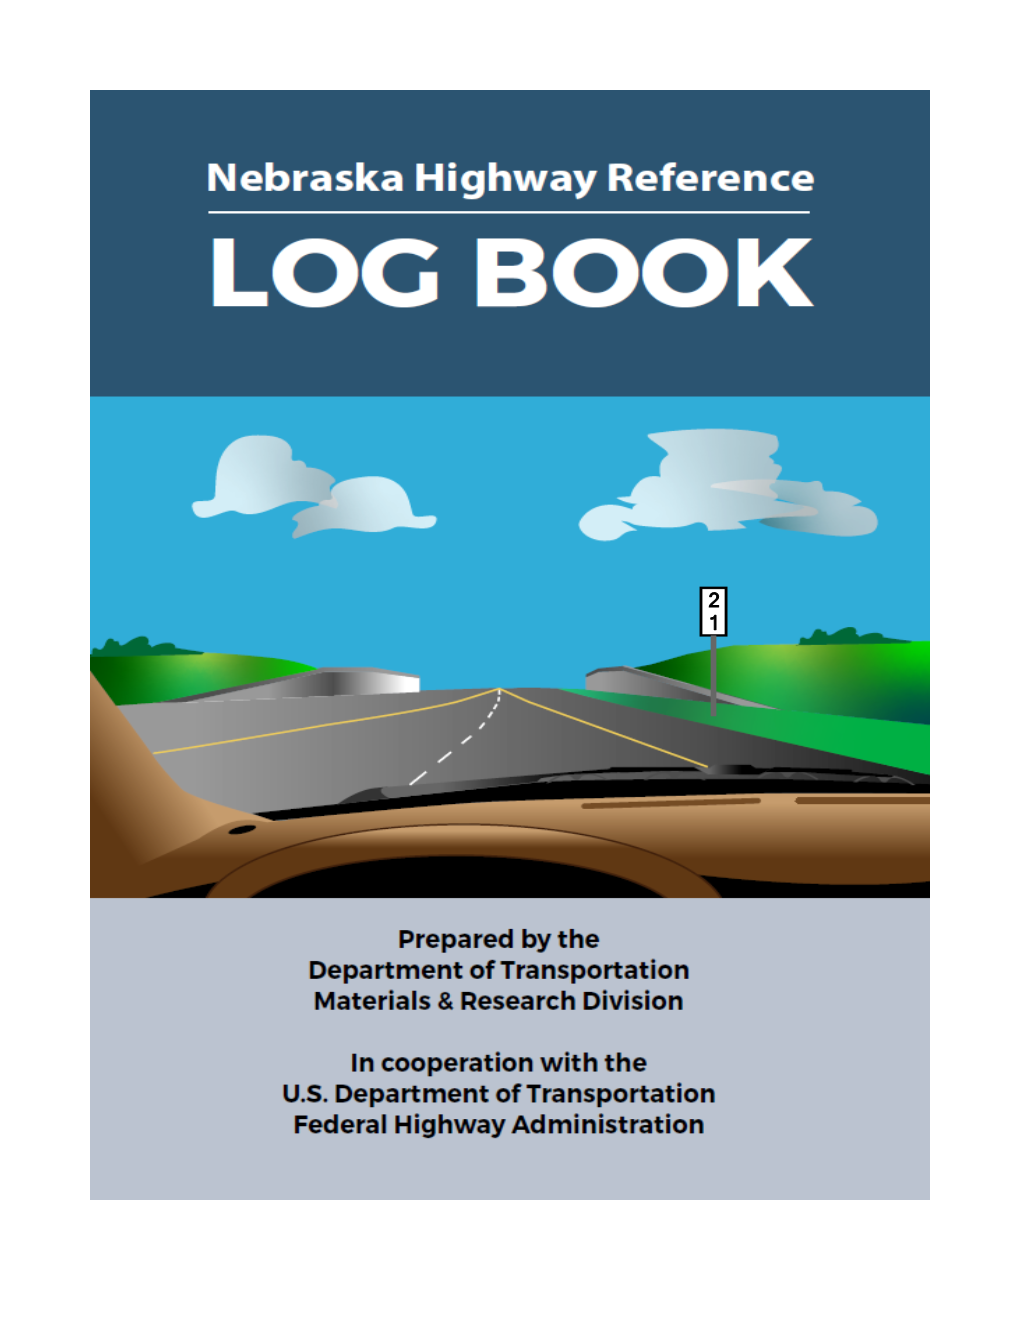 Nebraska Highway Reference Post Log Book